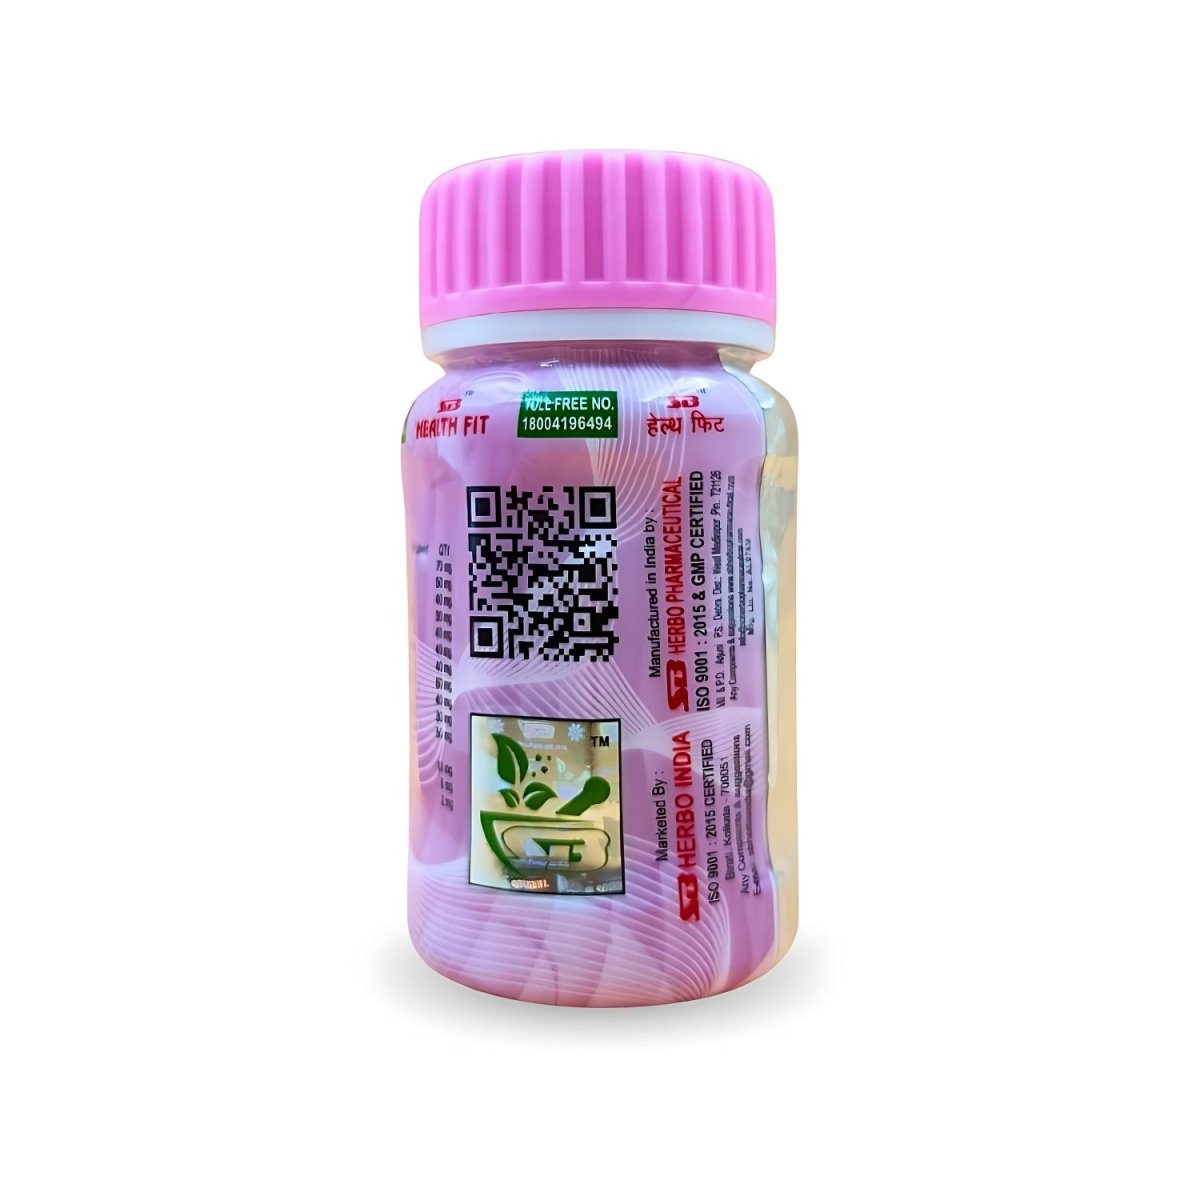 Ayurvedic Sb Herbo Health fit Capsule for good health ( Pack OF 2 )